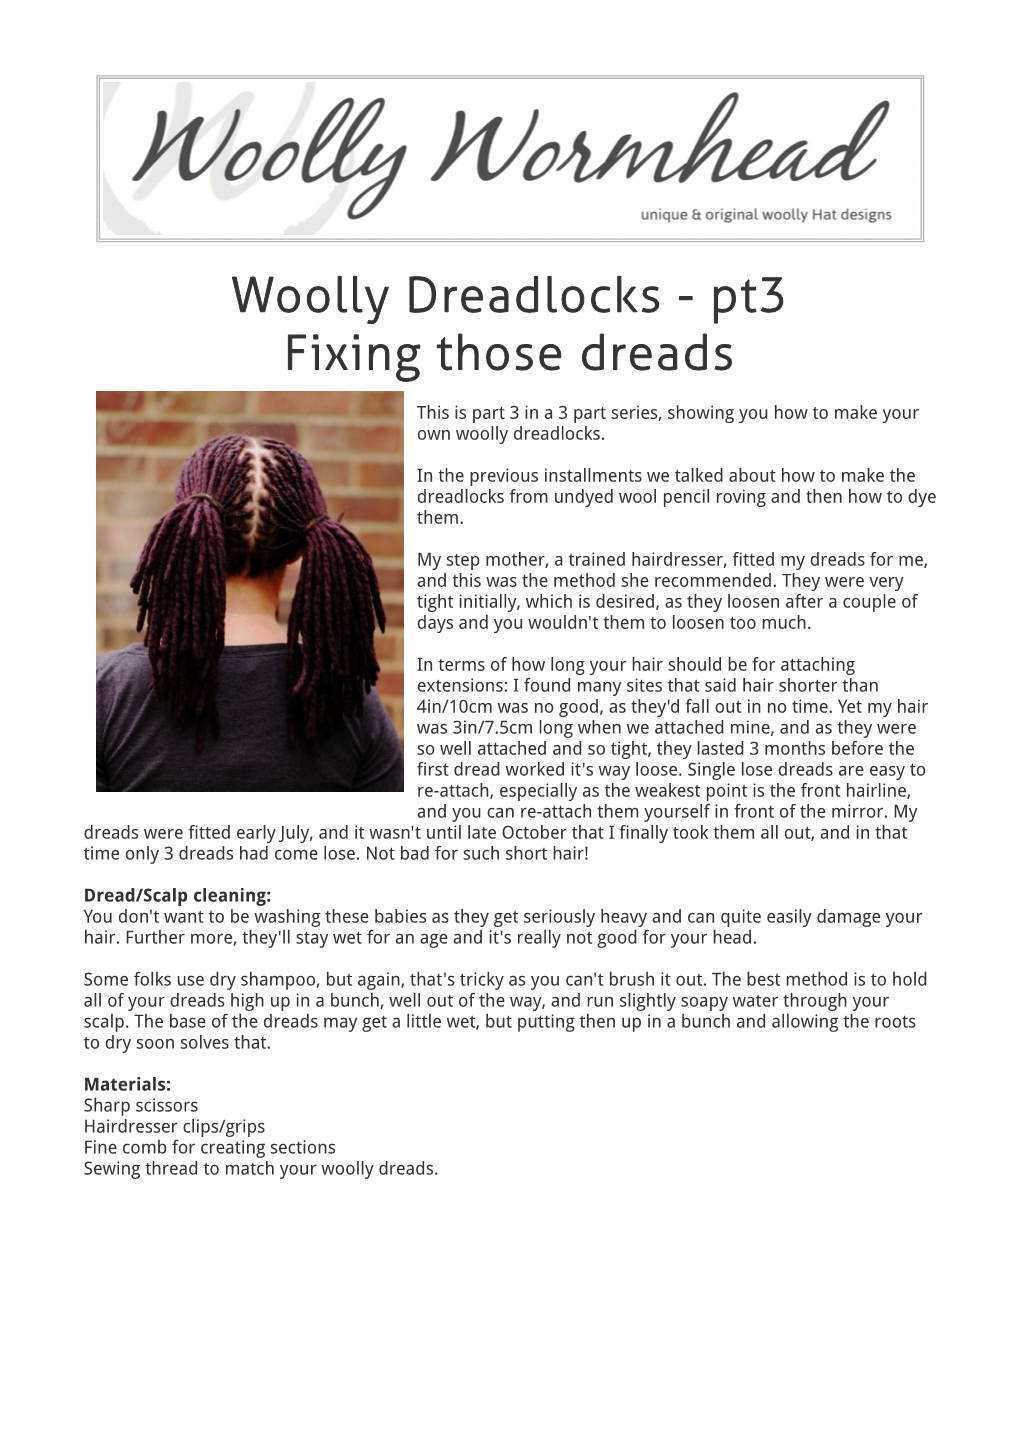 Woolly Wormhead © 2010